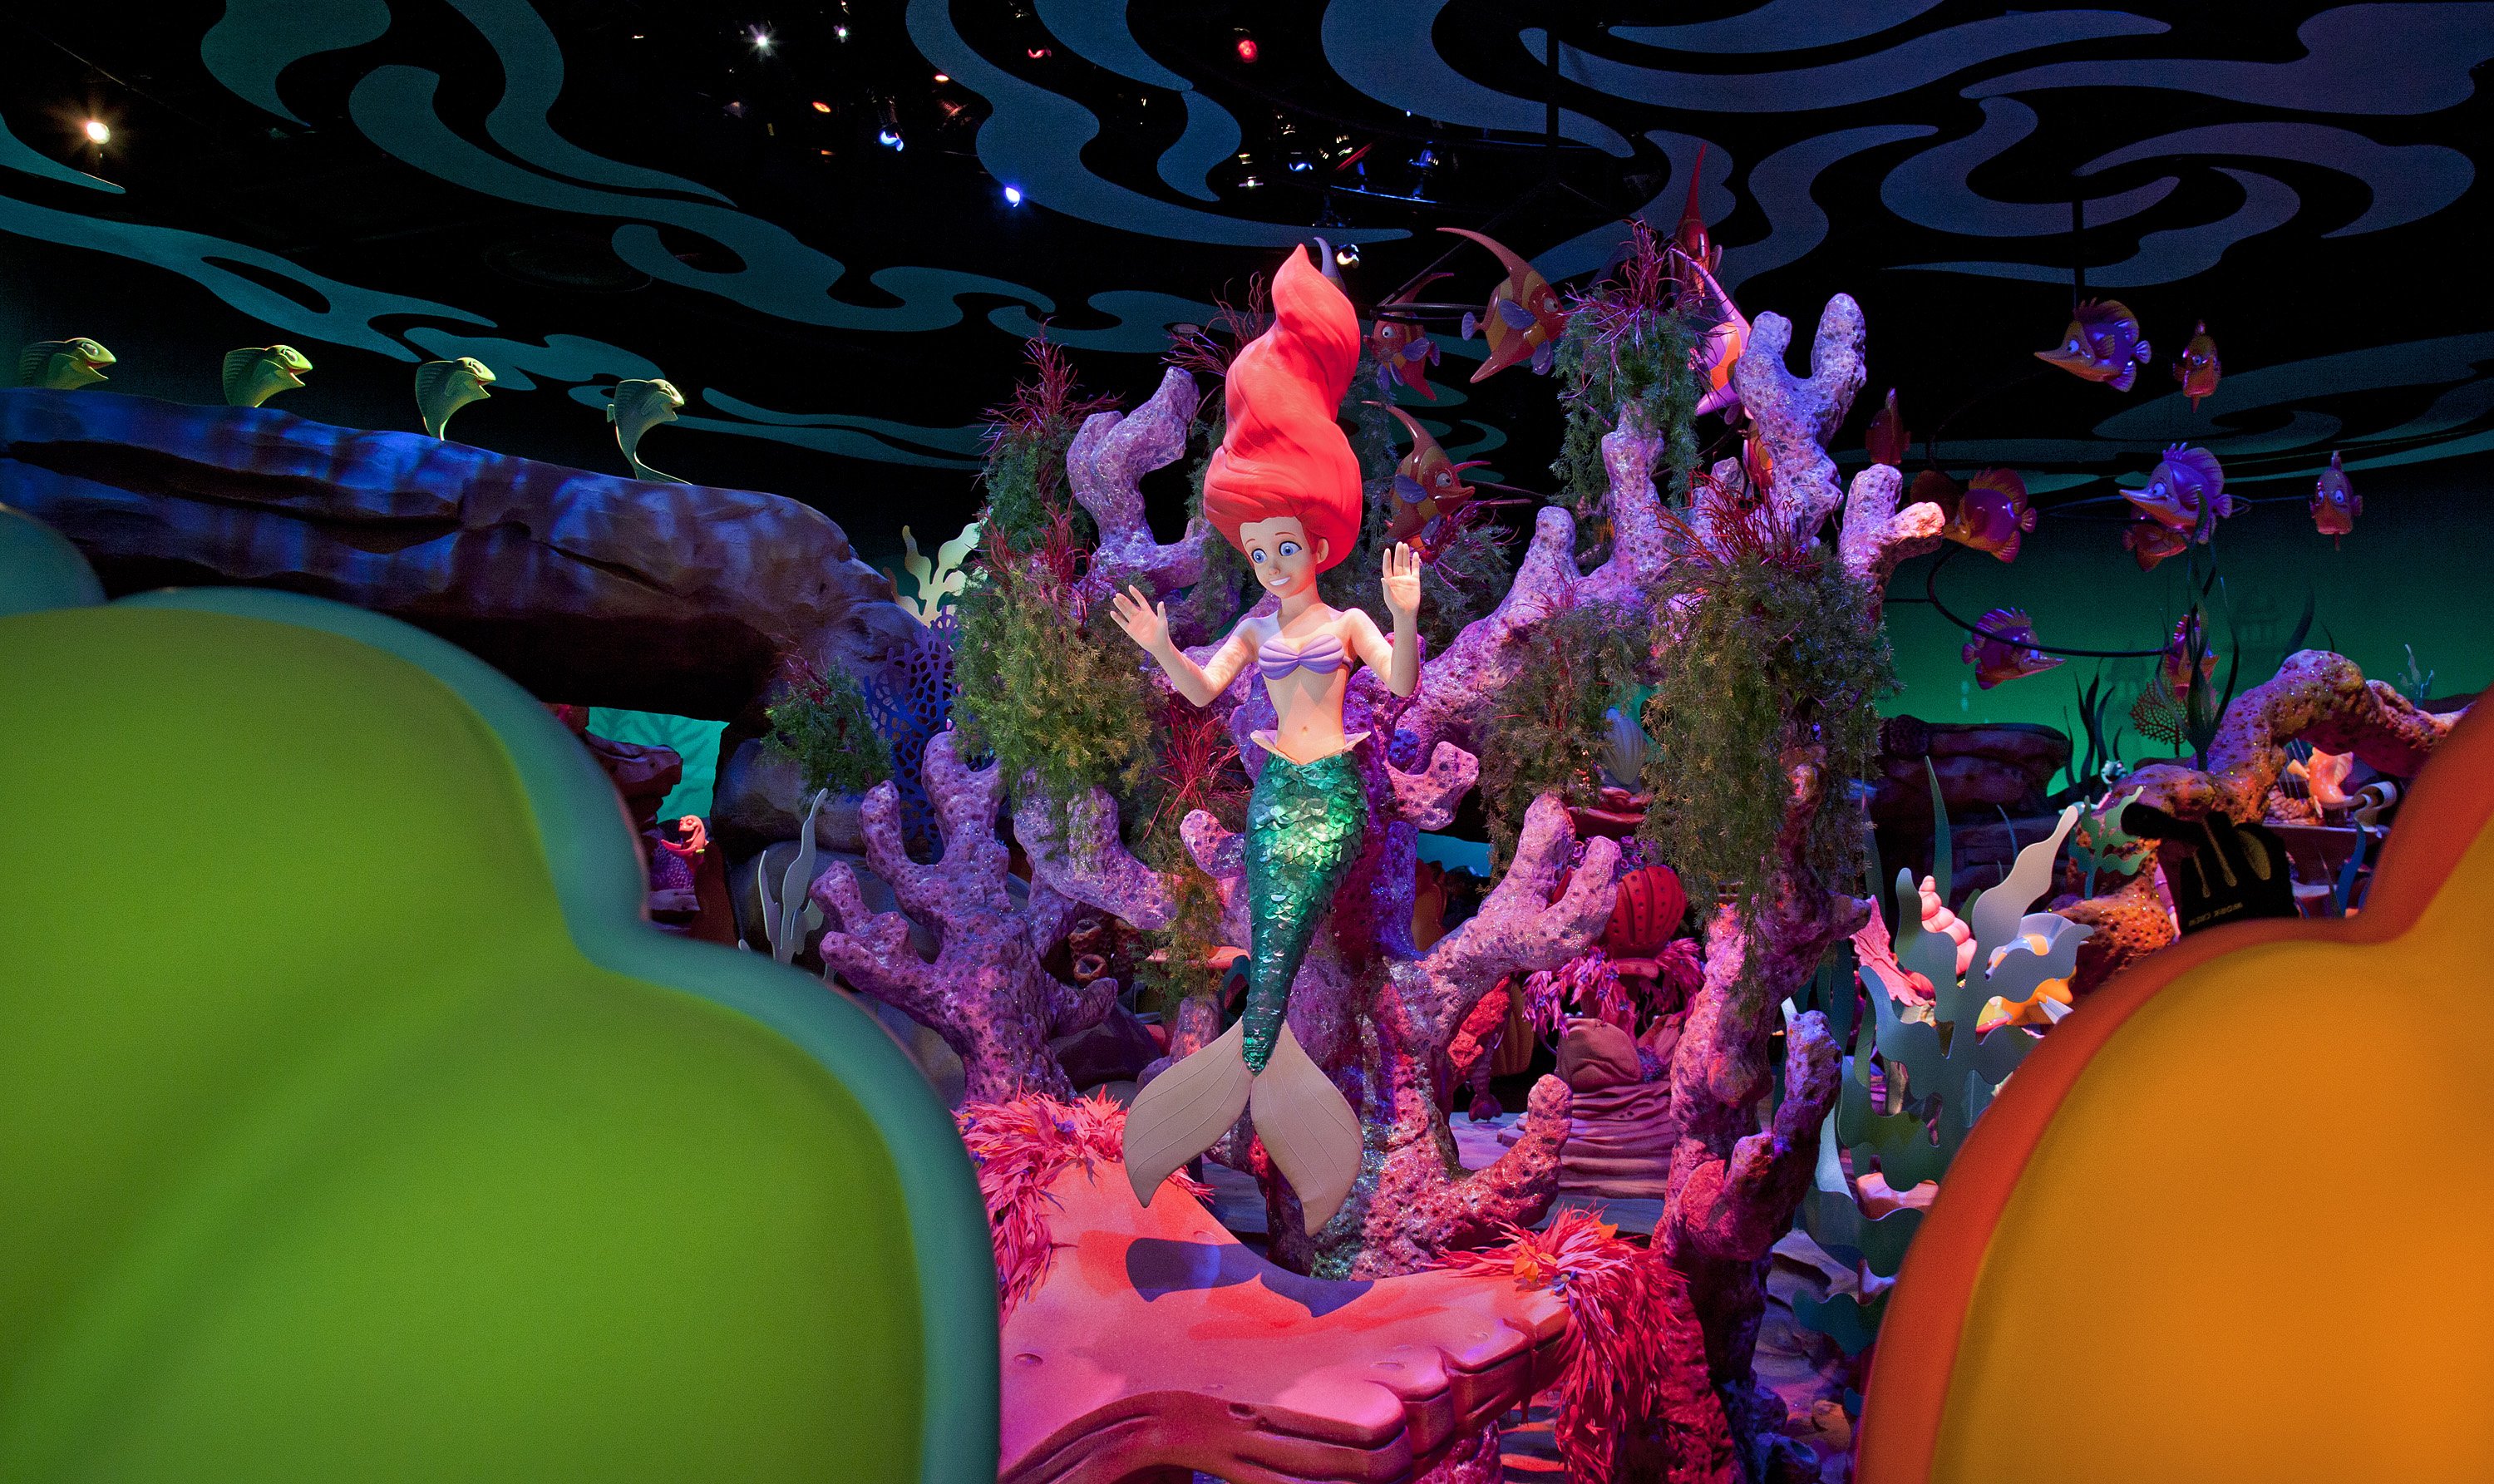 little, Mermaid, Disney, Fantasy, Animation, Cartoon, Adventure, Family, 1littlemermaid, Ariel, Princess, Ocean, Sea, Underwater Wallpaper